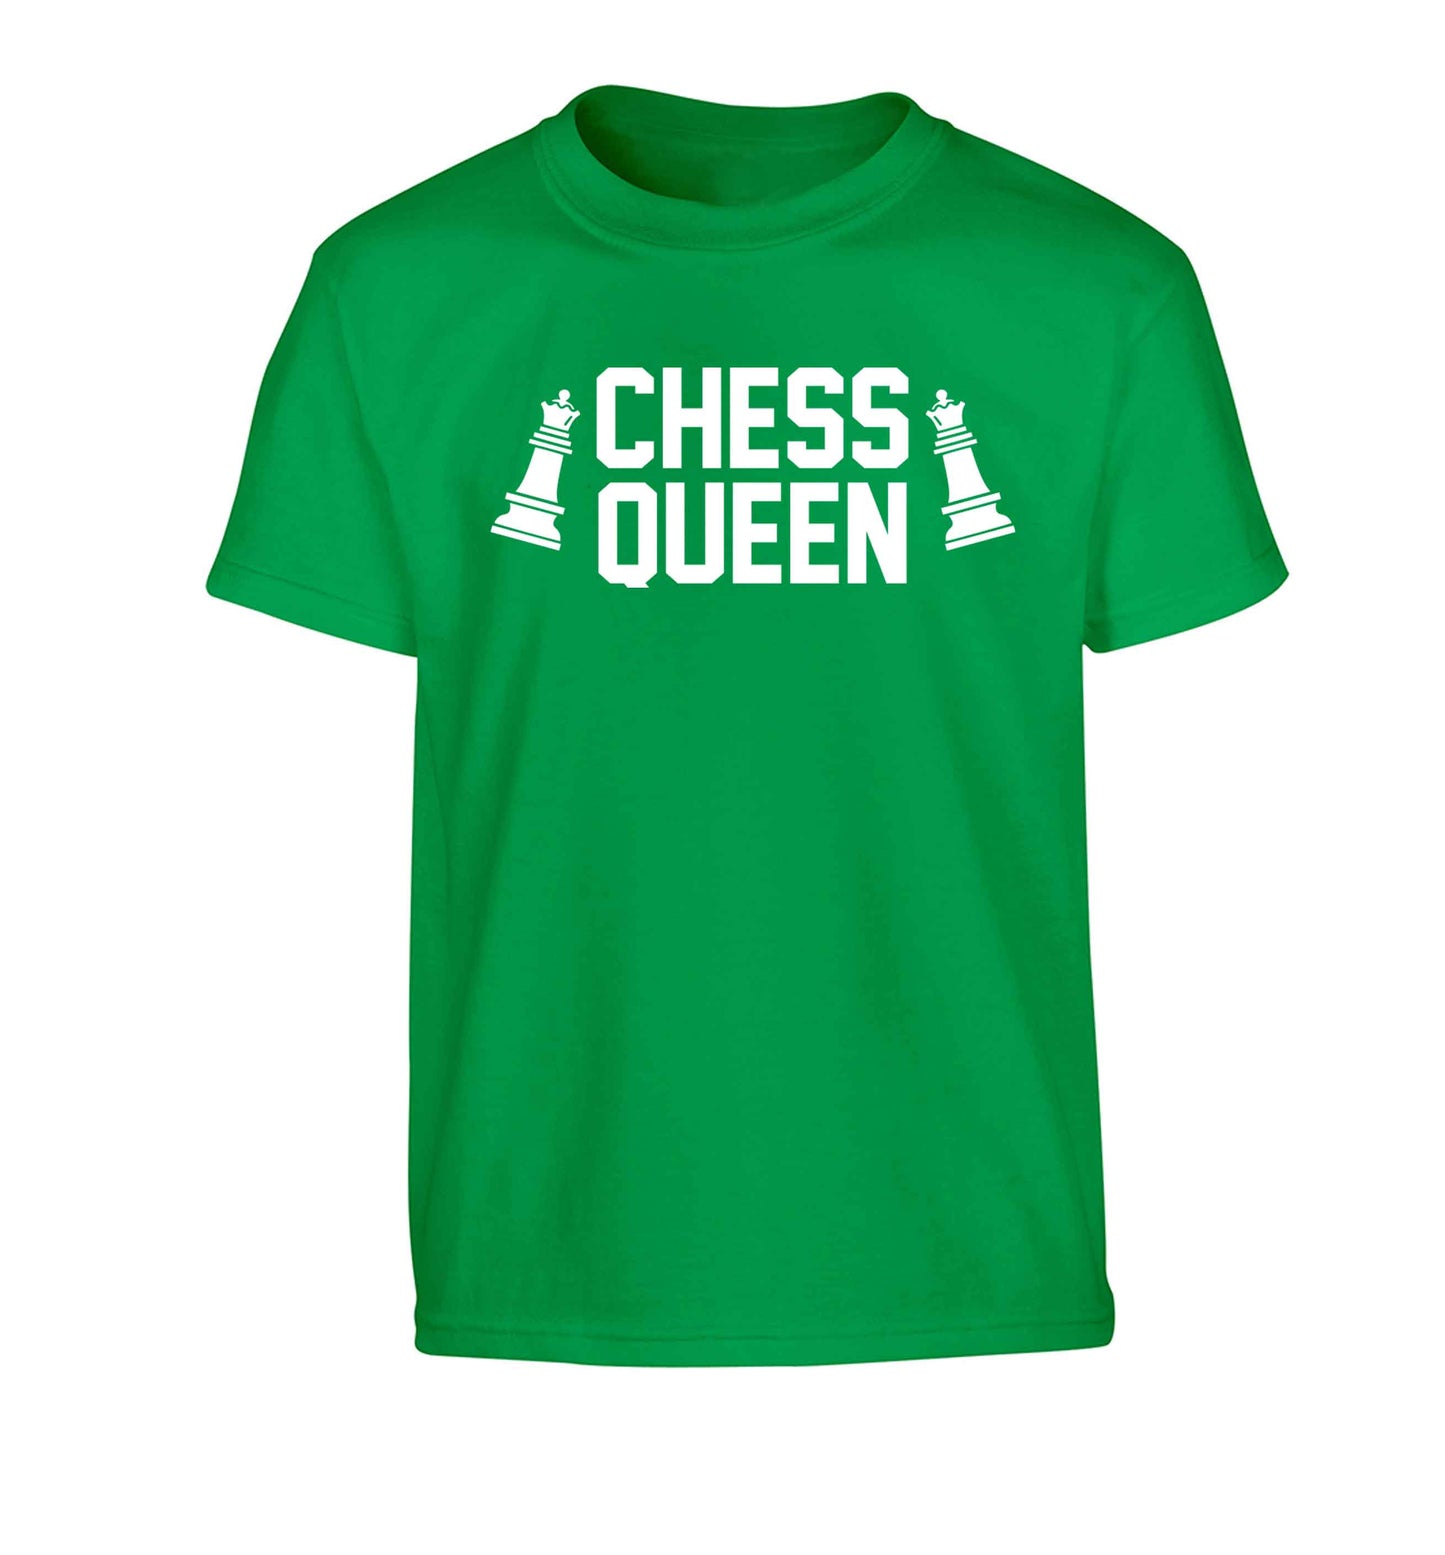 Chess queen Children's green Tshirt 12-13 Years